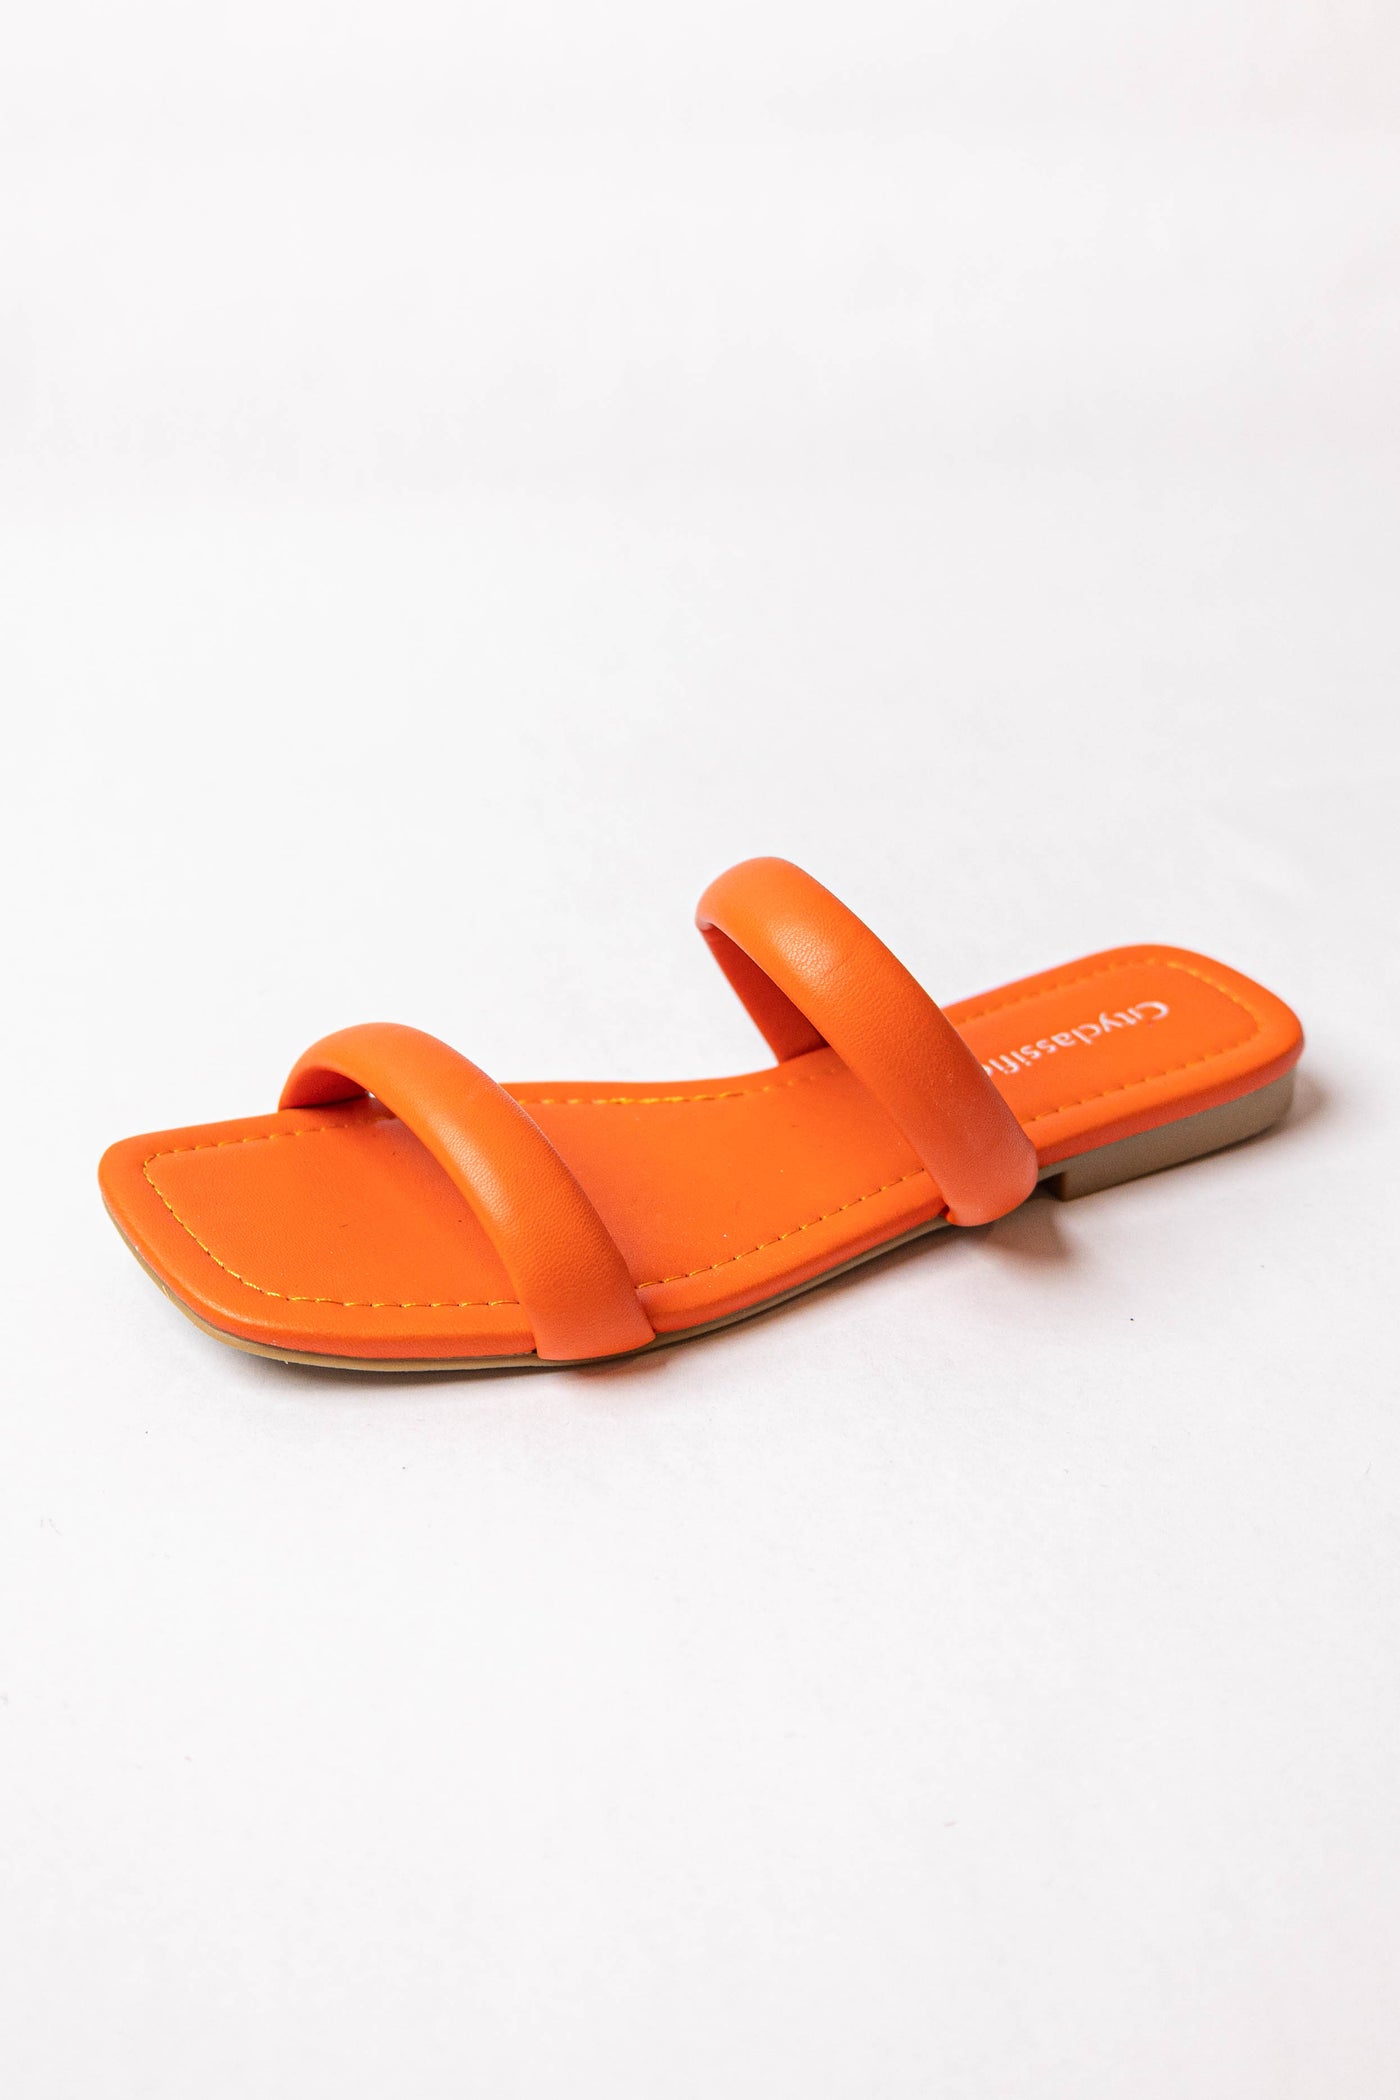 Fire Orange Pleather Square Toe Slip On Sandals